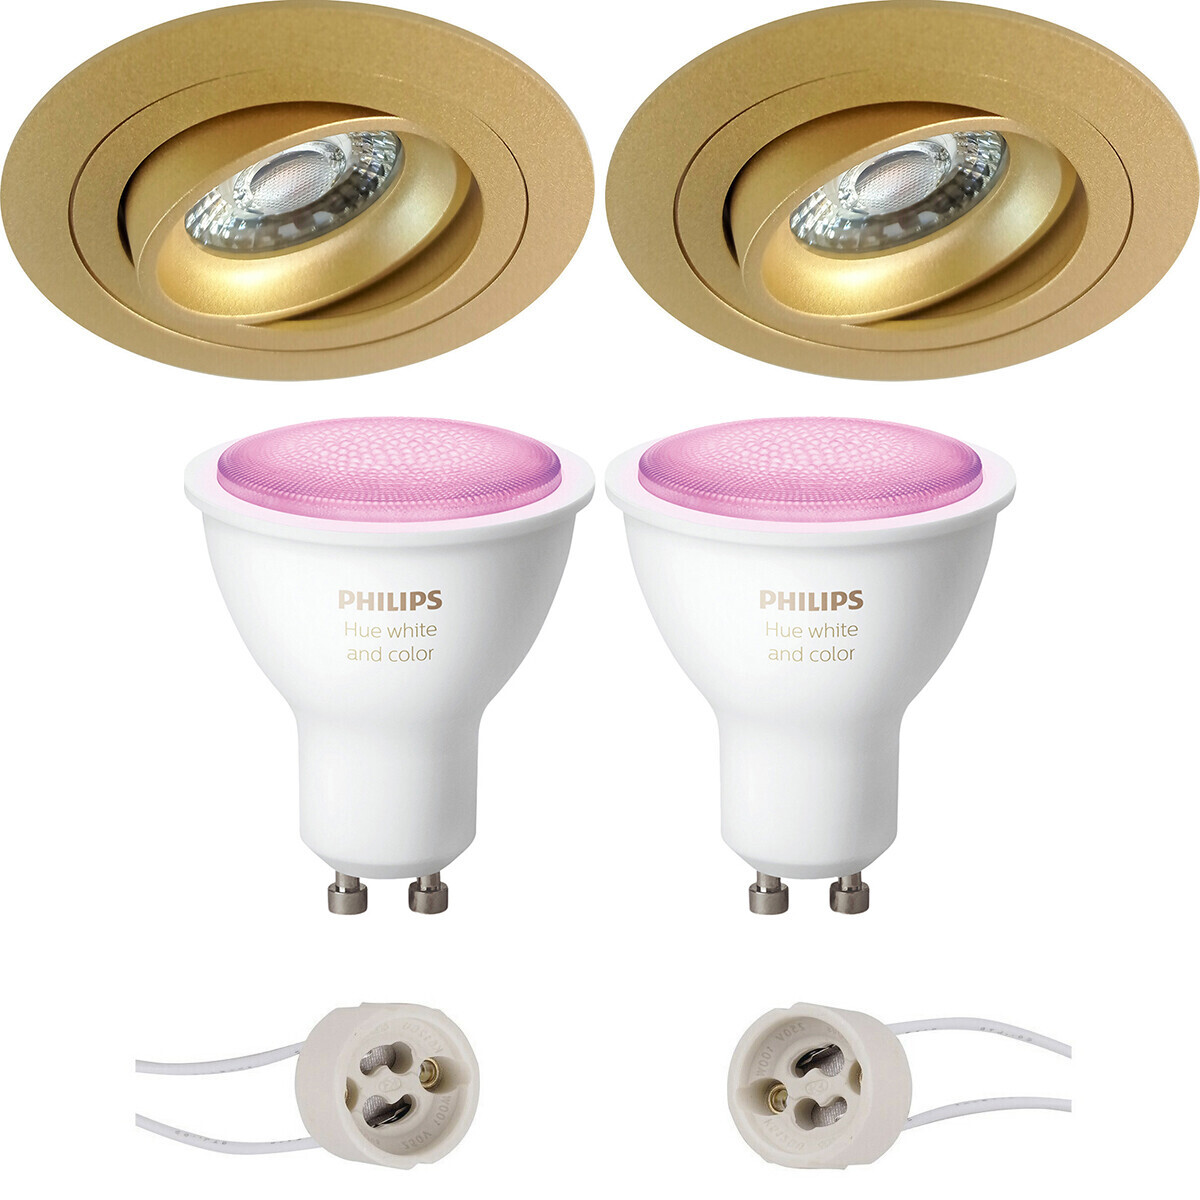 BES LED Pragmi Alpin Pro - Inbouw Rond - Mat Goud - Kantelbaar - Ø92mm - Philips Hue - LED Spot Set GU10 - White and Color Ambiance - Bluetooth